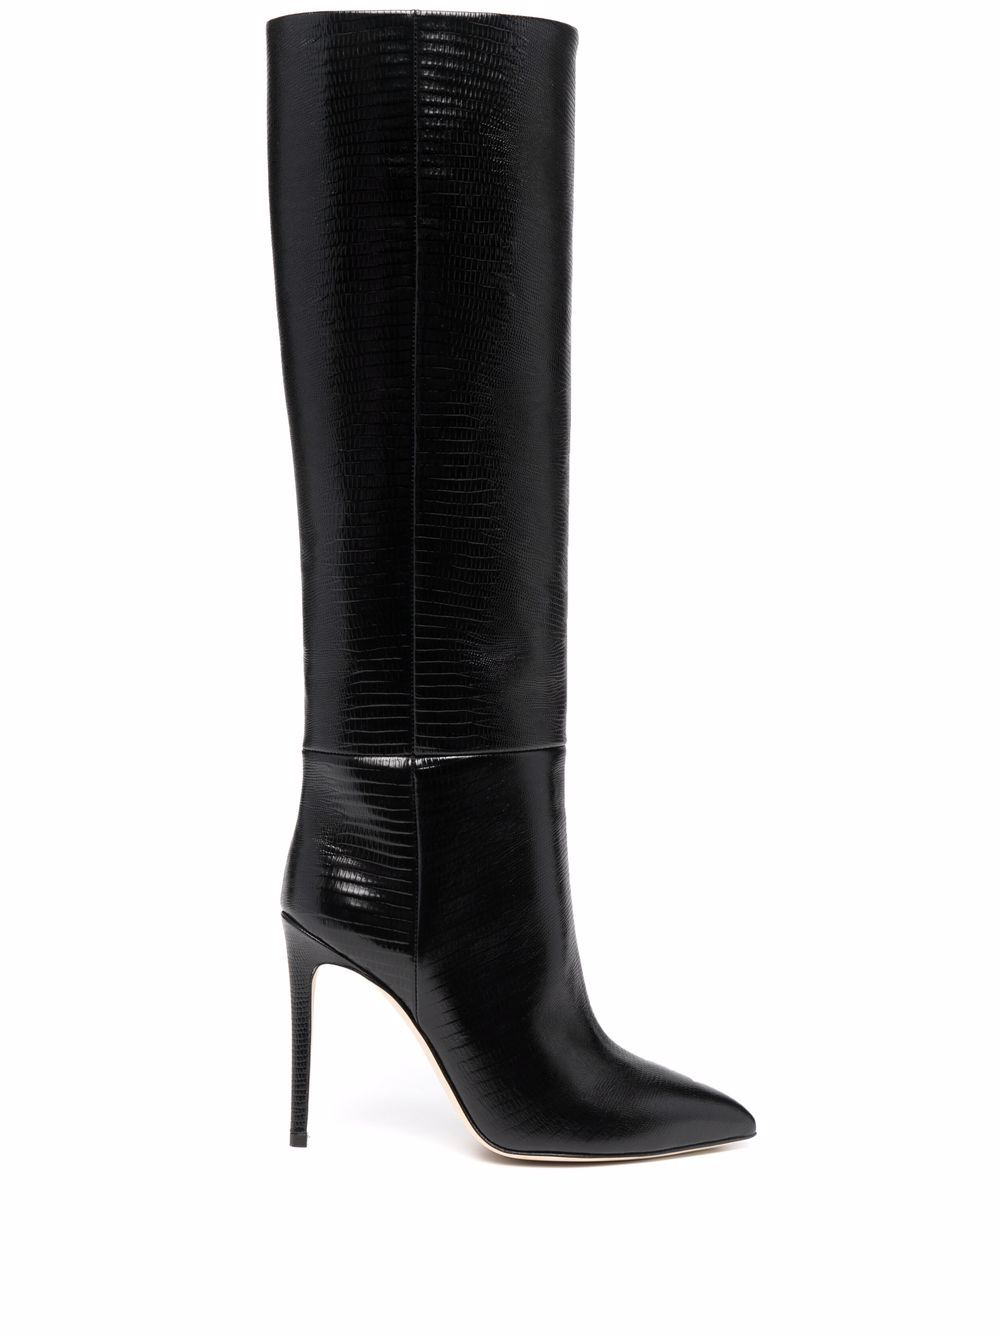 Lizard Print Leather Boots дамски обувки Paris Texas 840183409_36